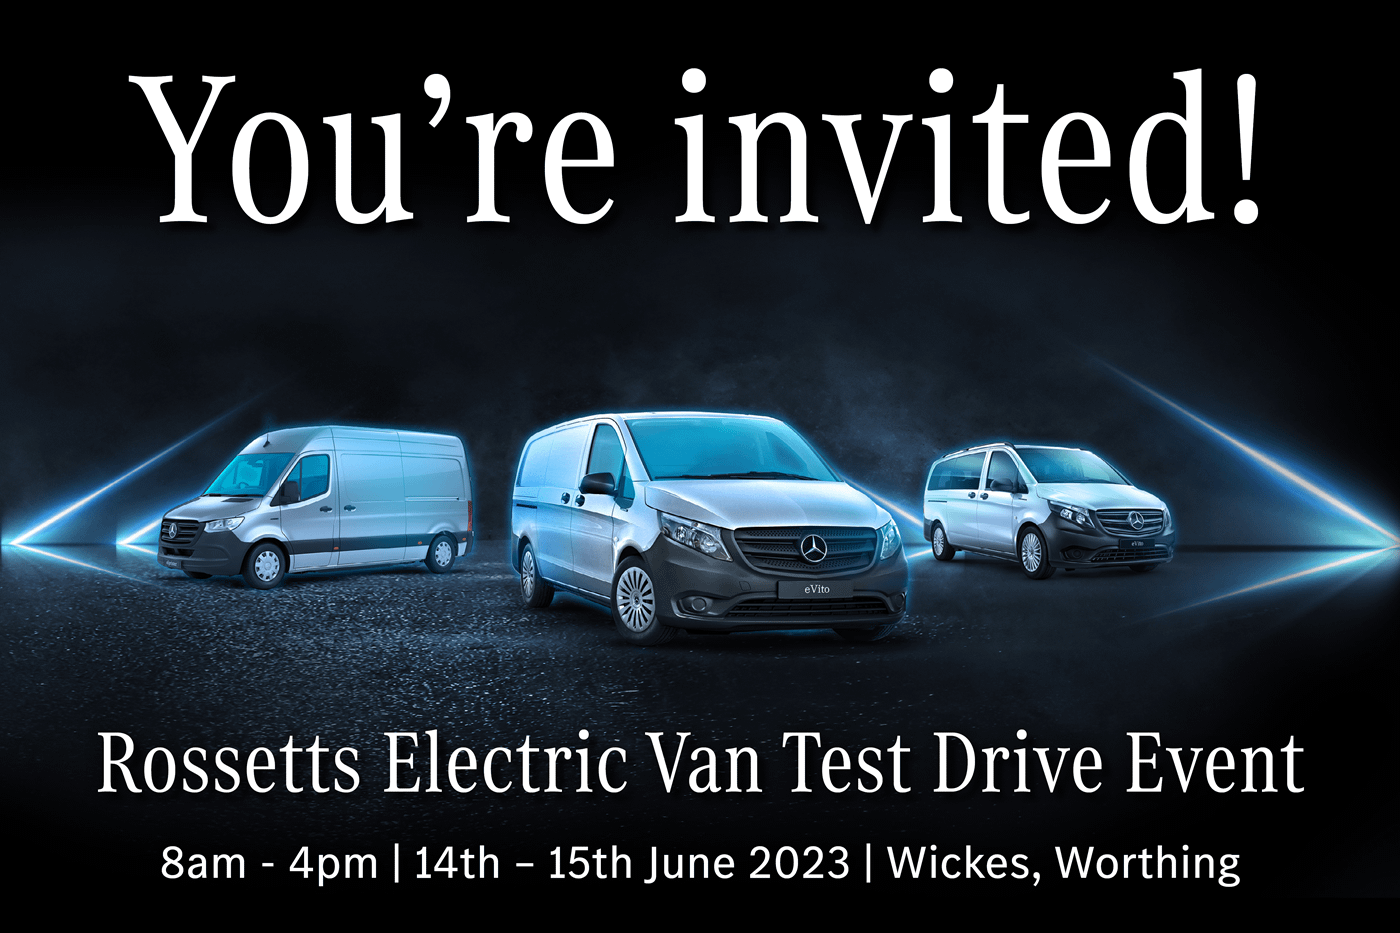 Rossetts Electric Van Test Drive Event